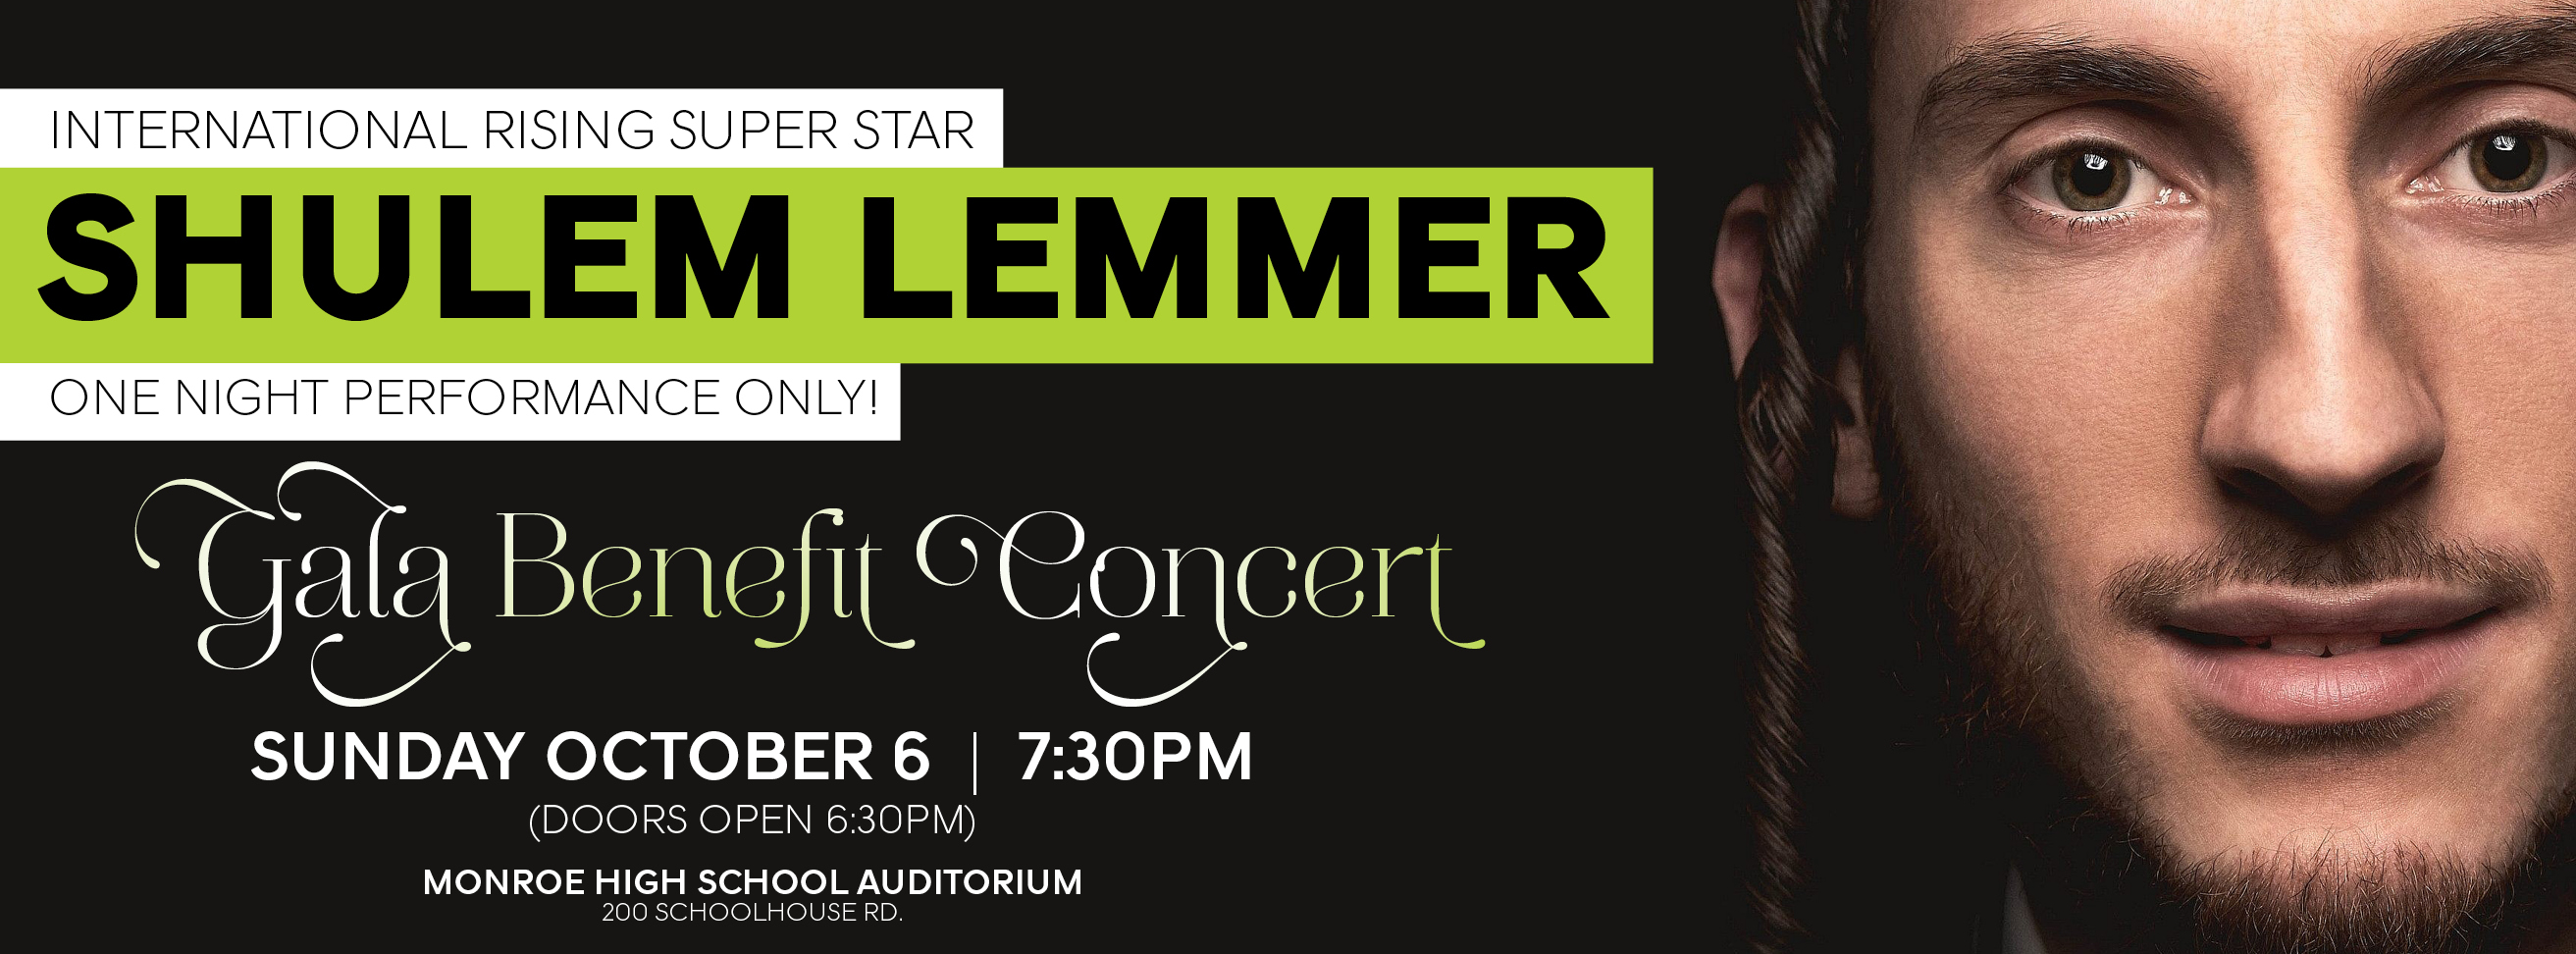 Web_banner-Lemmer-Concert